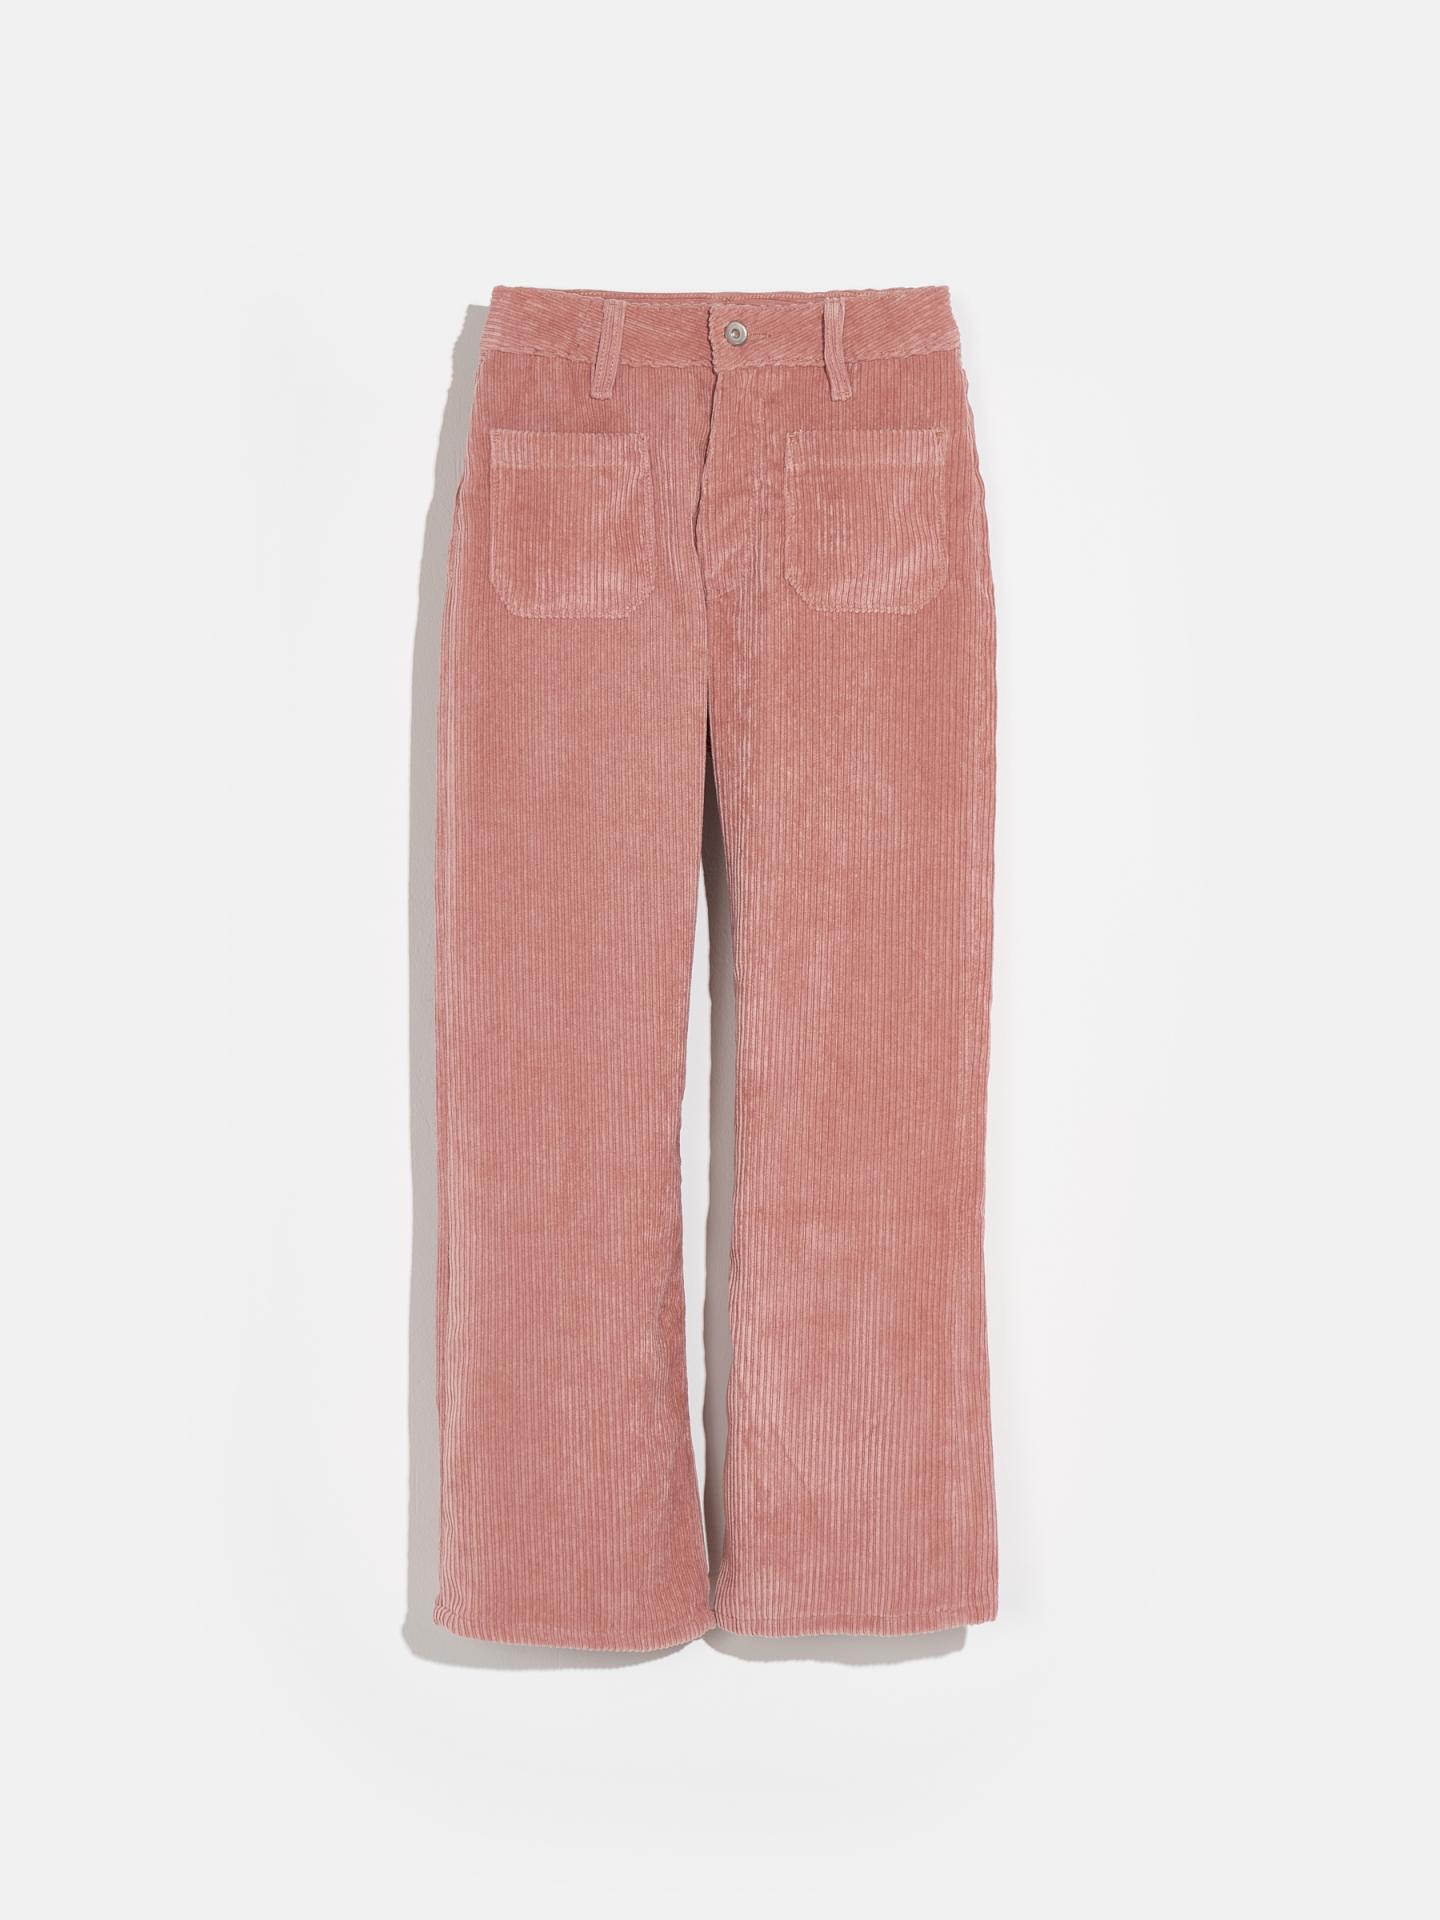 Bellerose,PEPY32,Pantalón en pana rosa 